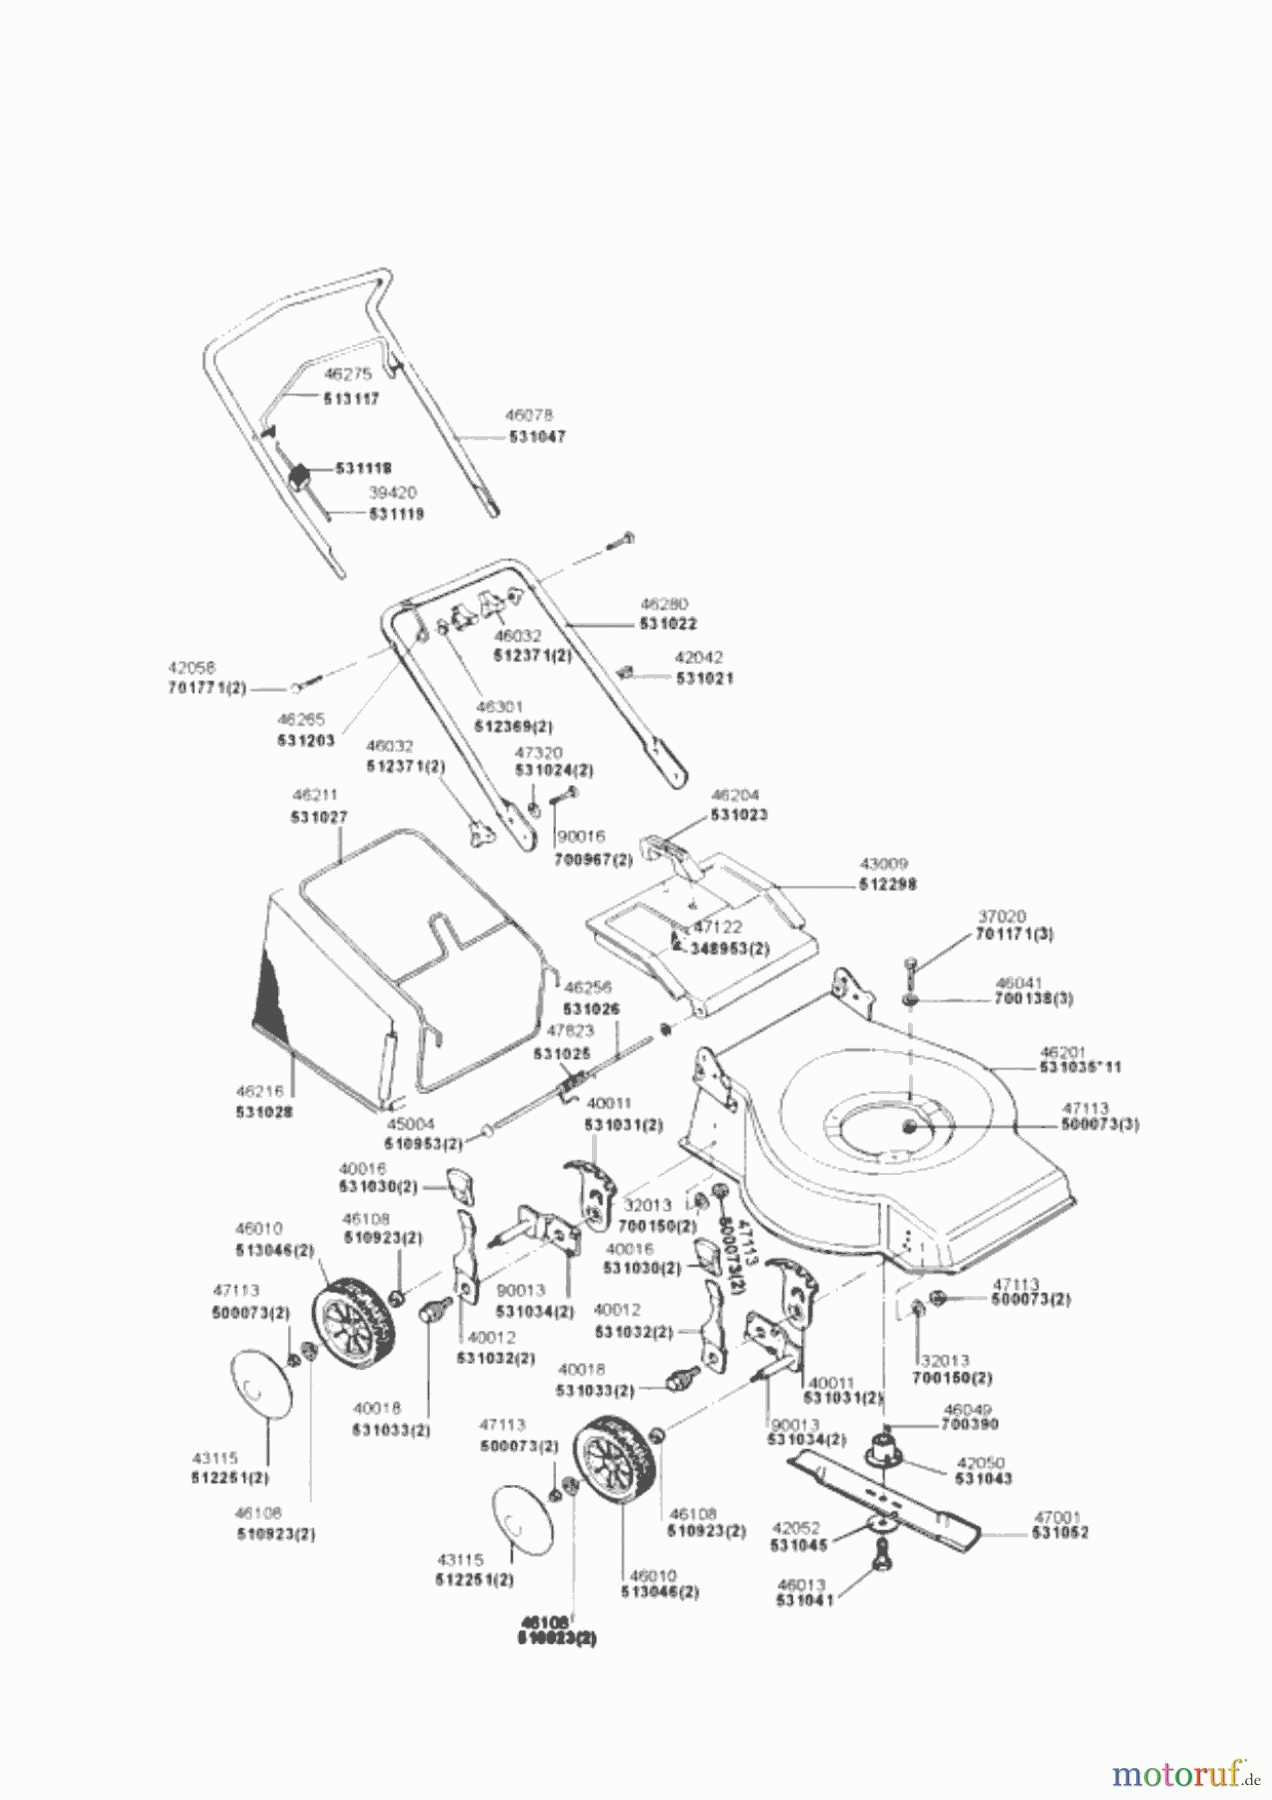  GHD Gartentechnik Benzinrasenmäher MD 460 B  01/1995 Seite 1